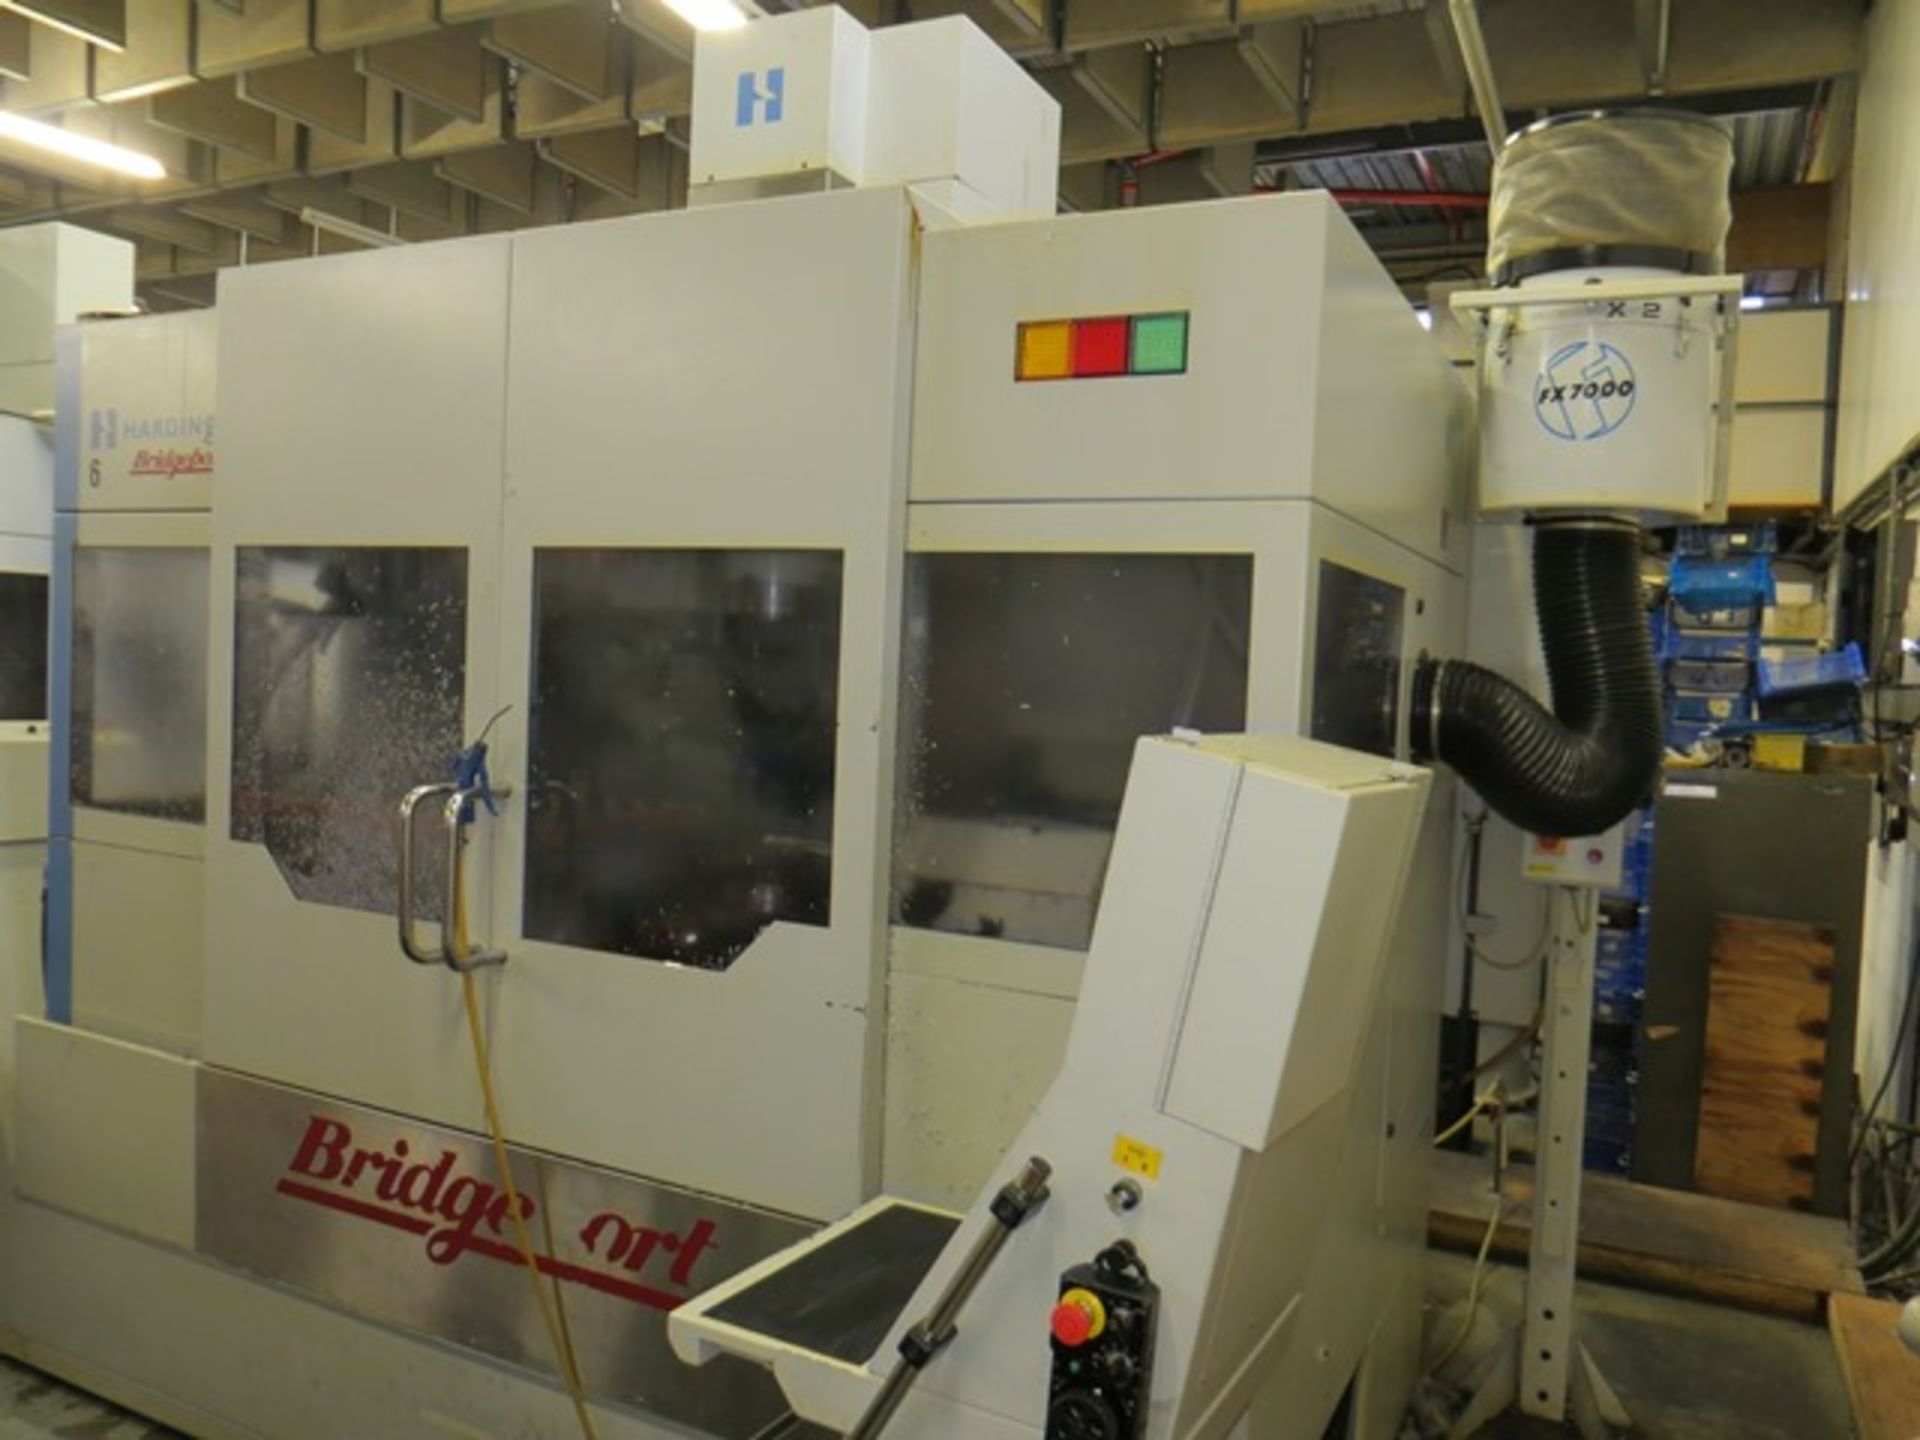 Hardinge Bridgeport MV204 CU/15 CNL vertical machining centre with Heidenhain control, residue